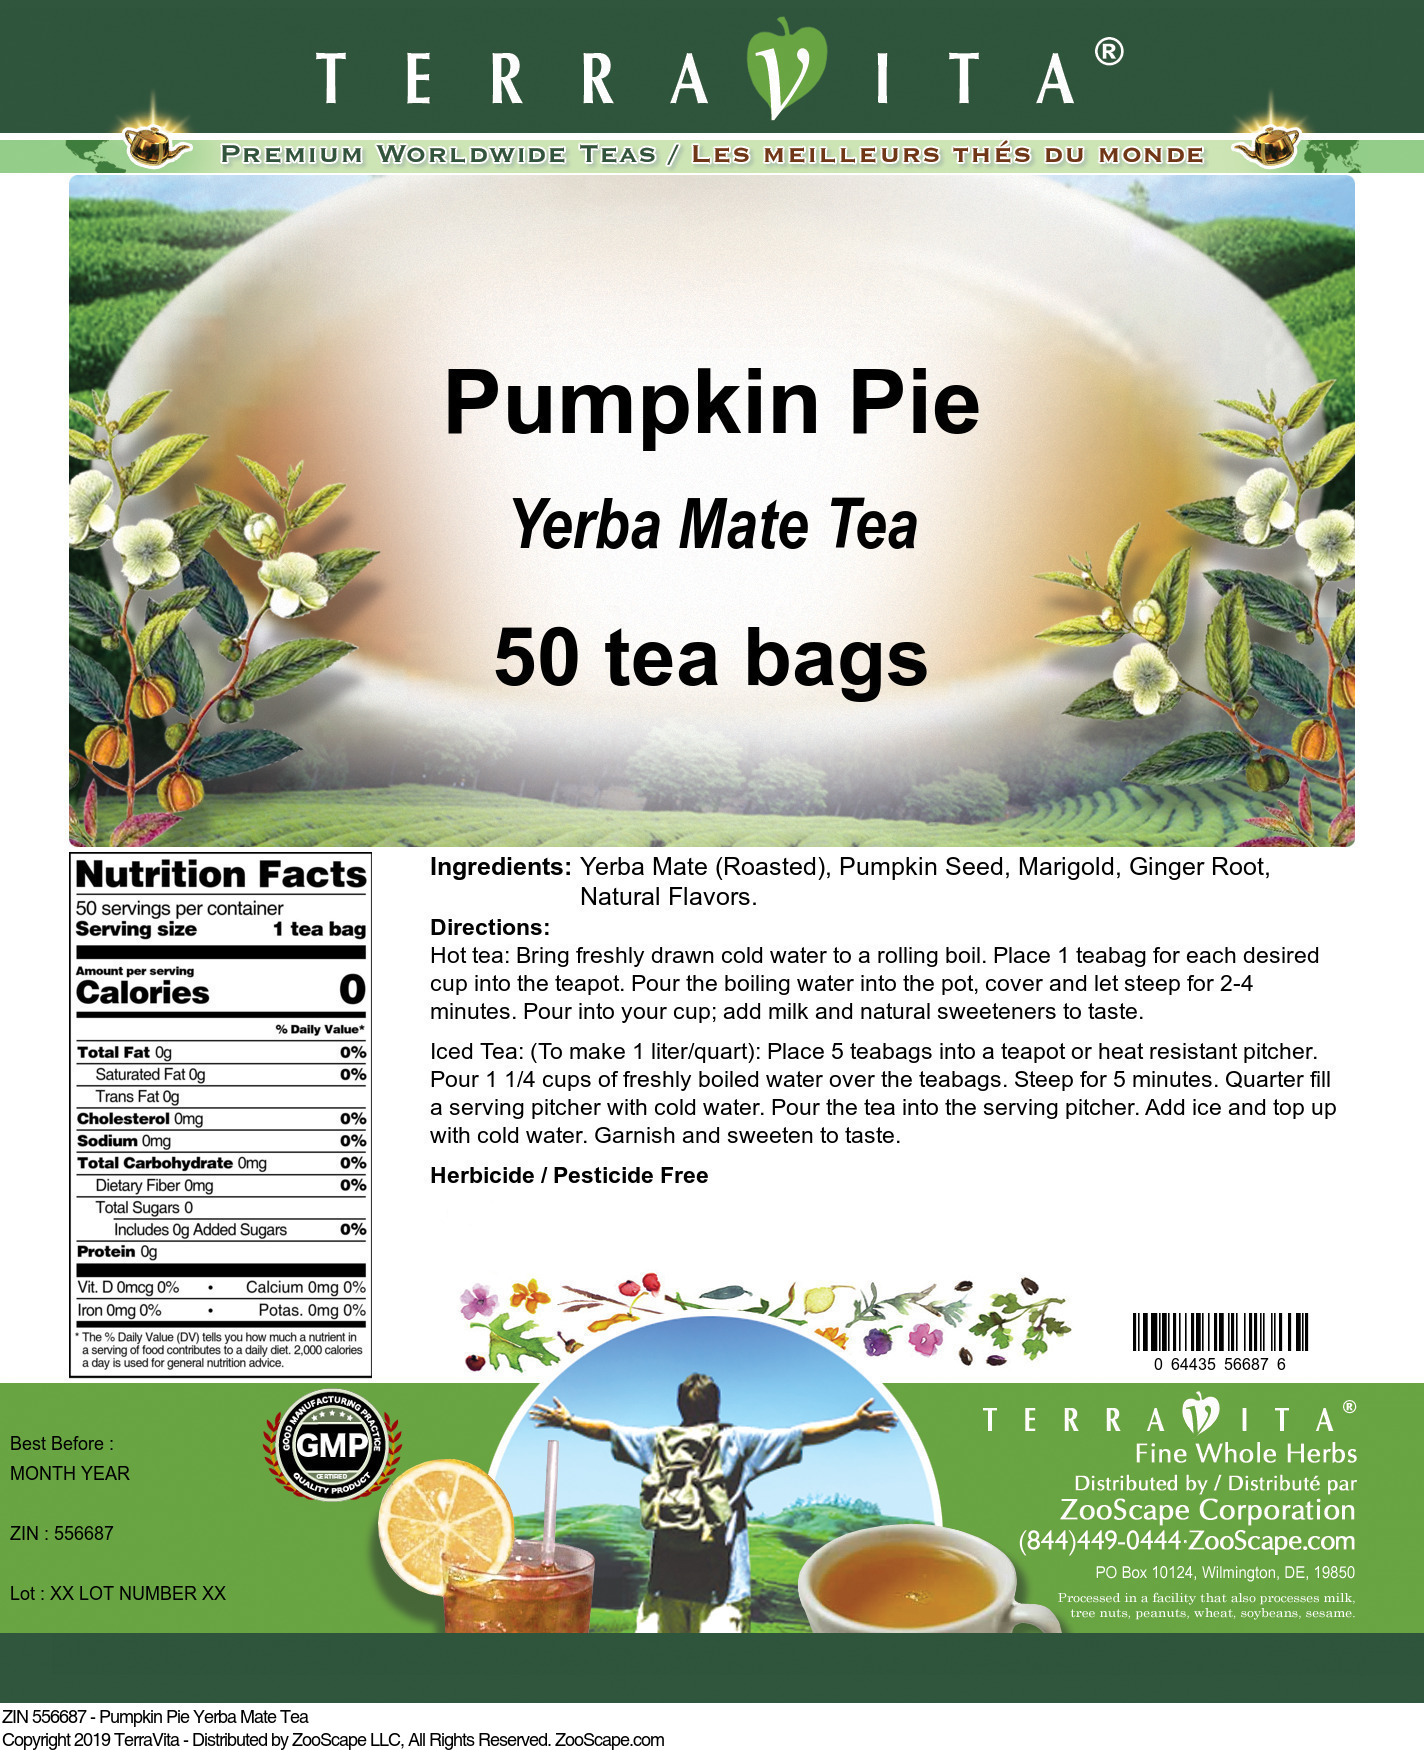 Pumpkin Pie Yerba Mate Tea - Label